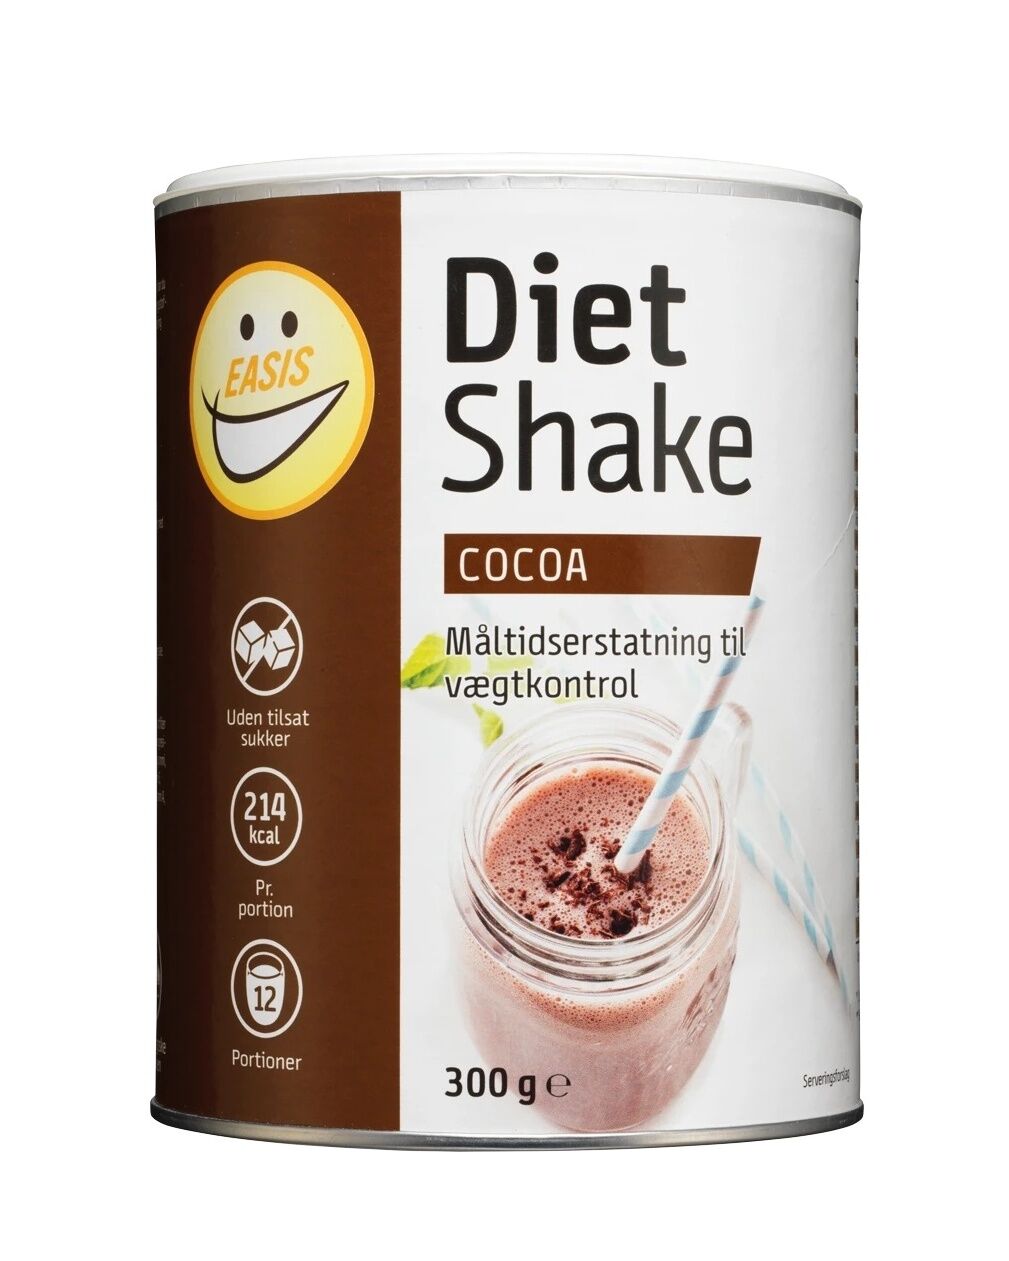 EASIS Diet Shake Cocoa 300g